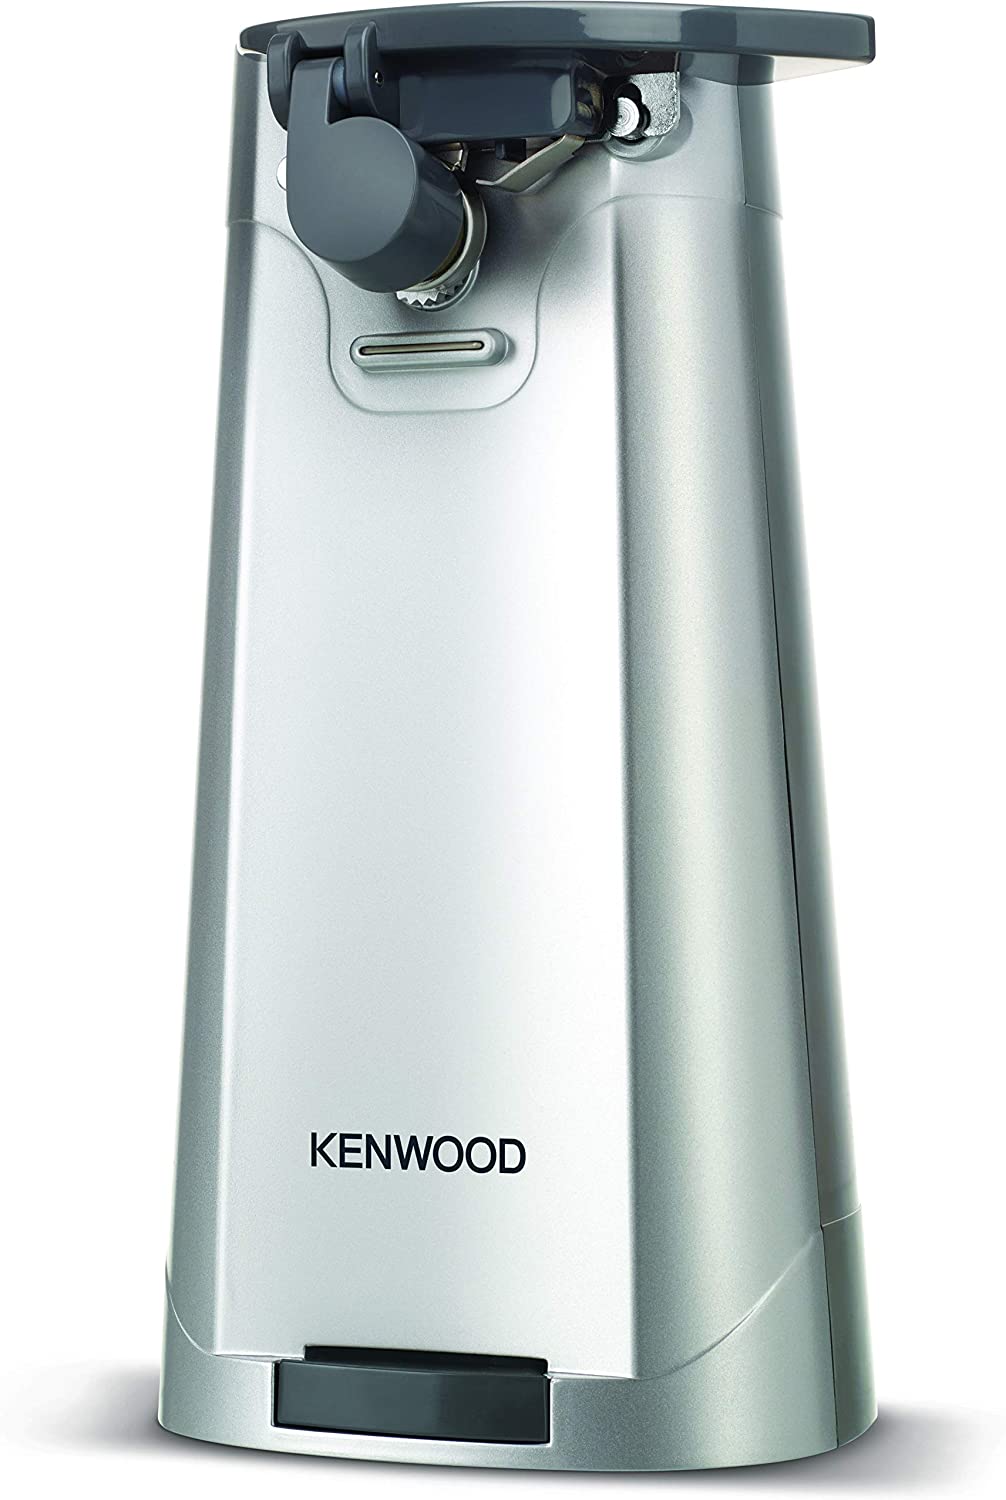 – Opener Electric Carlos Multi-Purpose Kenwood Can